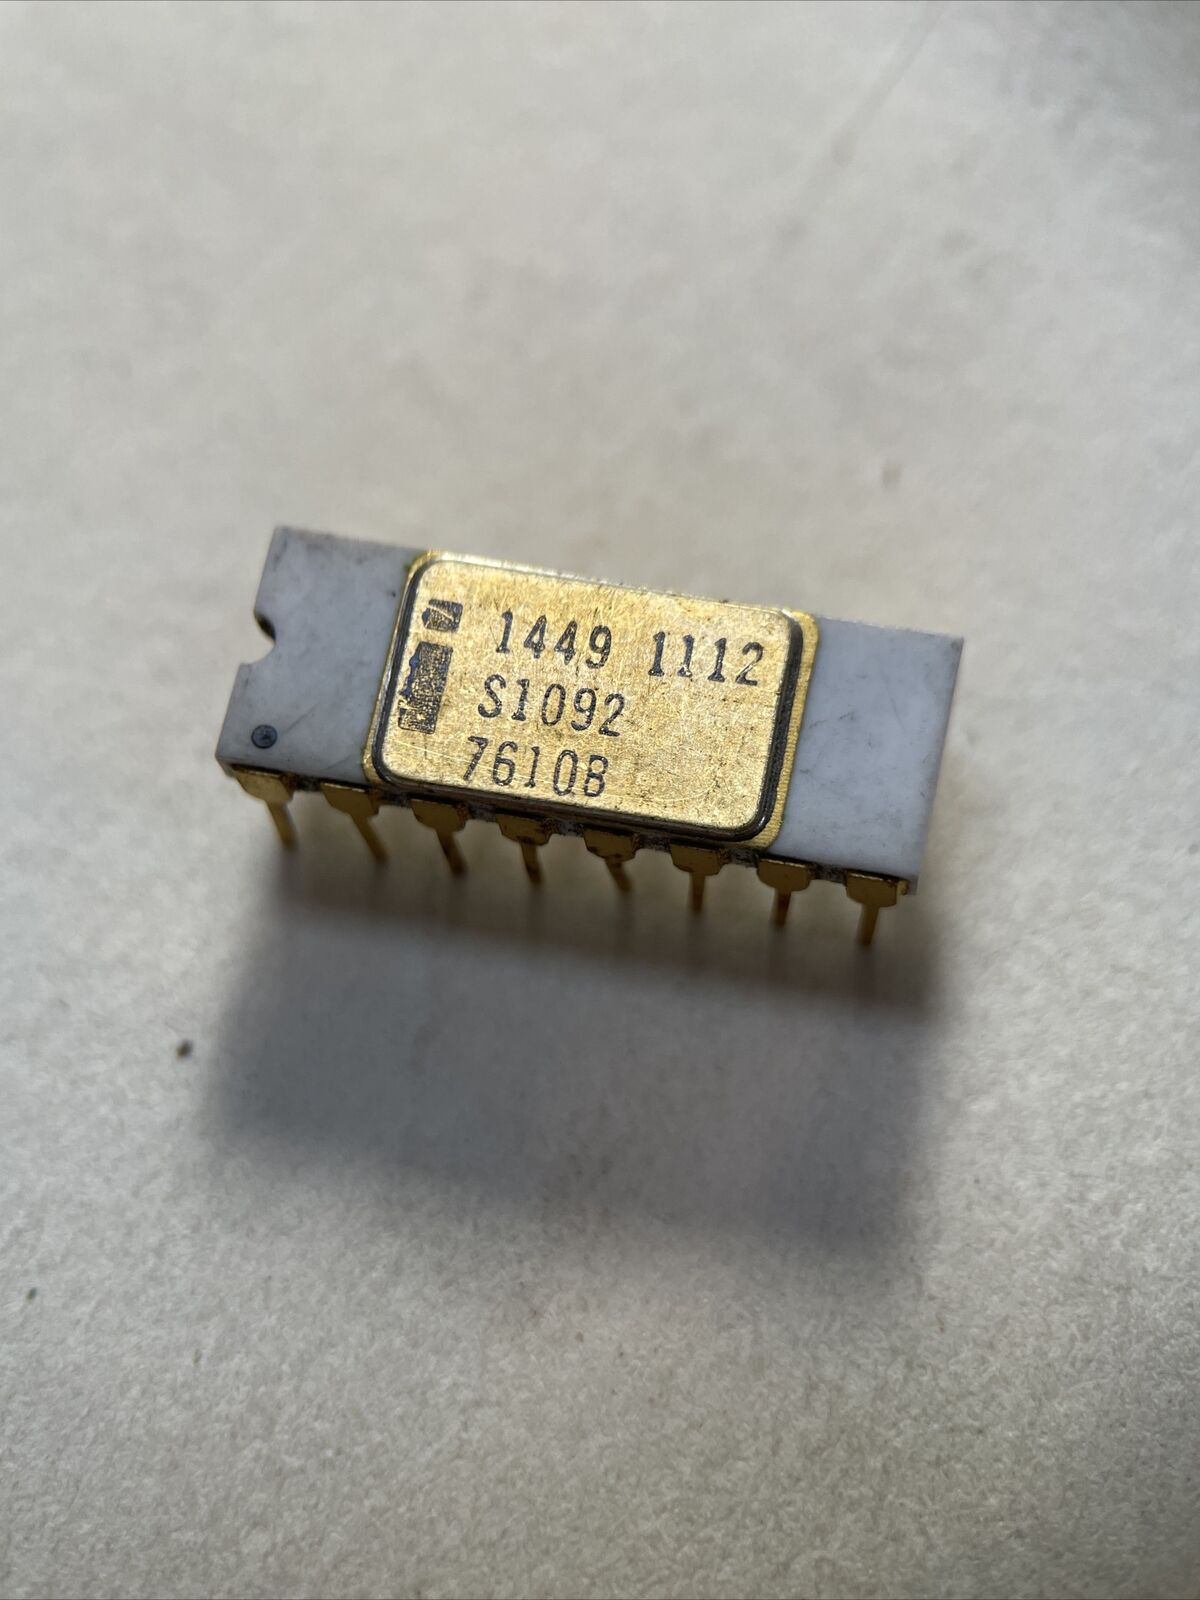 Vintage Computer Chip Gold White Ceramic Intel S1092 Rare